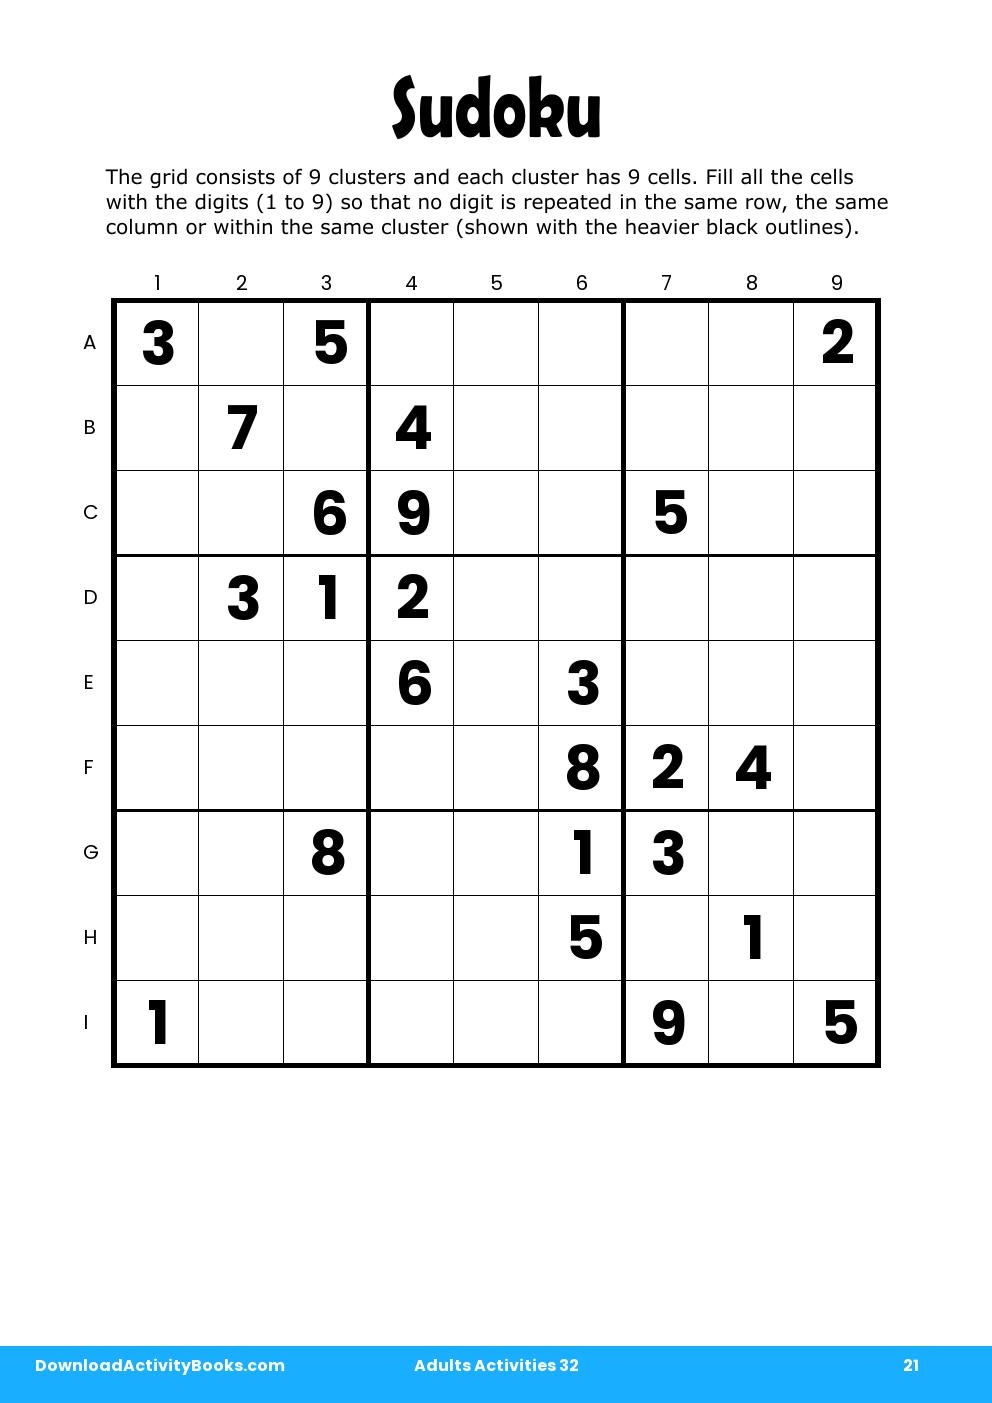 Sudoku in Adults Activities 32